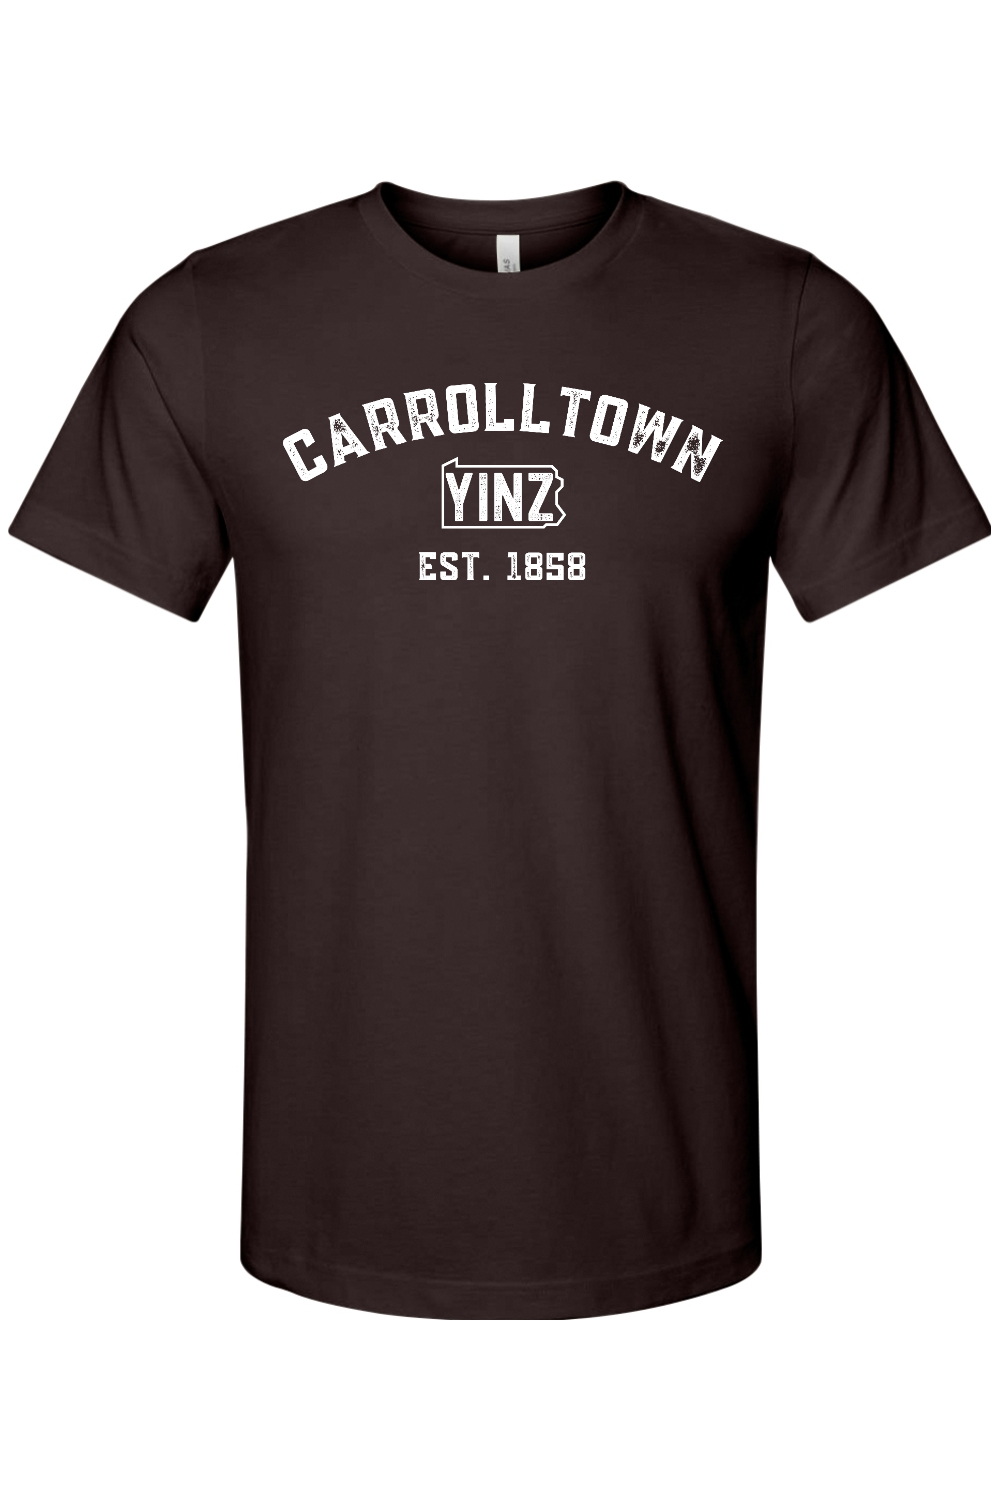 Carrolltown Yinzylvania - Yinzylvania